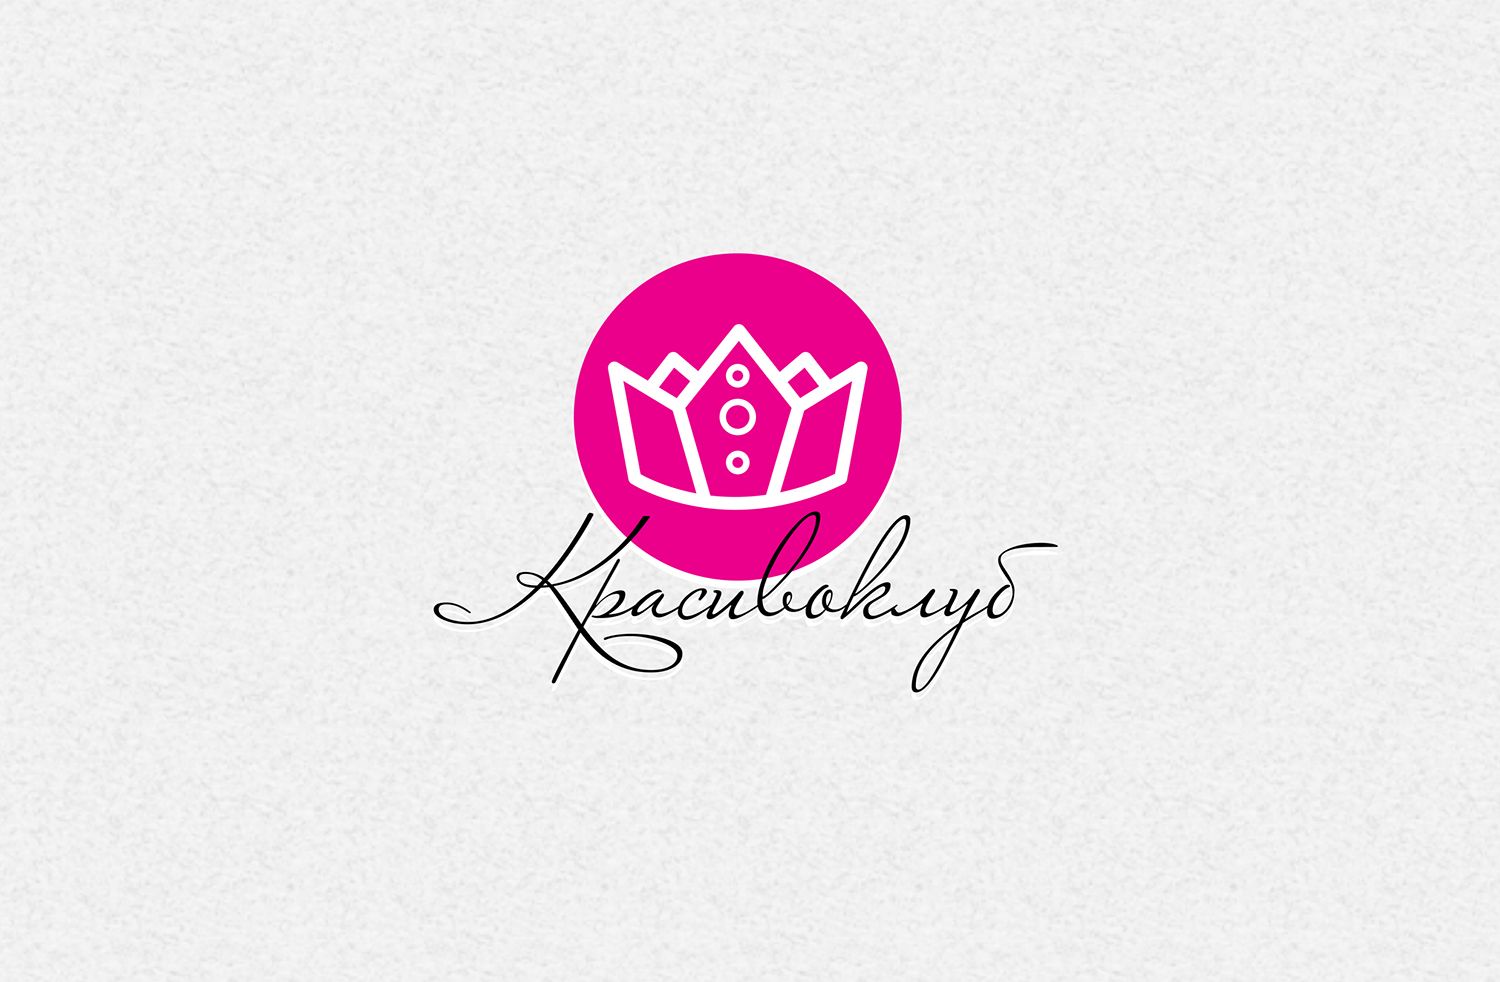 Красиво Клуб (логотип) - дизайнер Budylkina